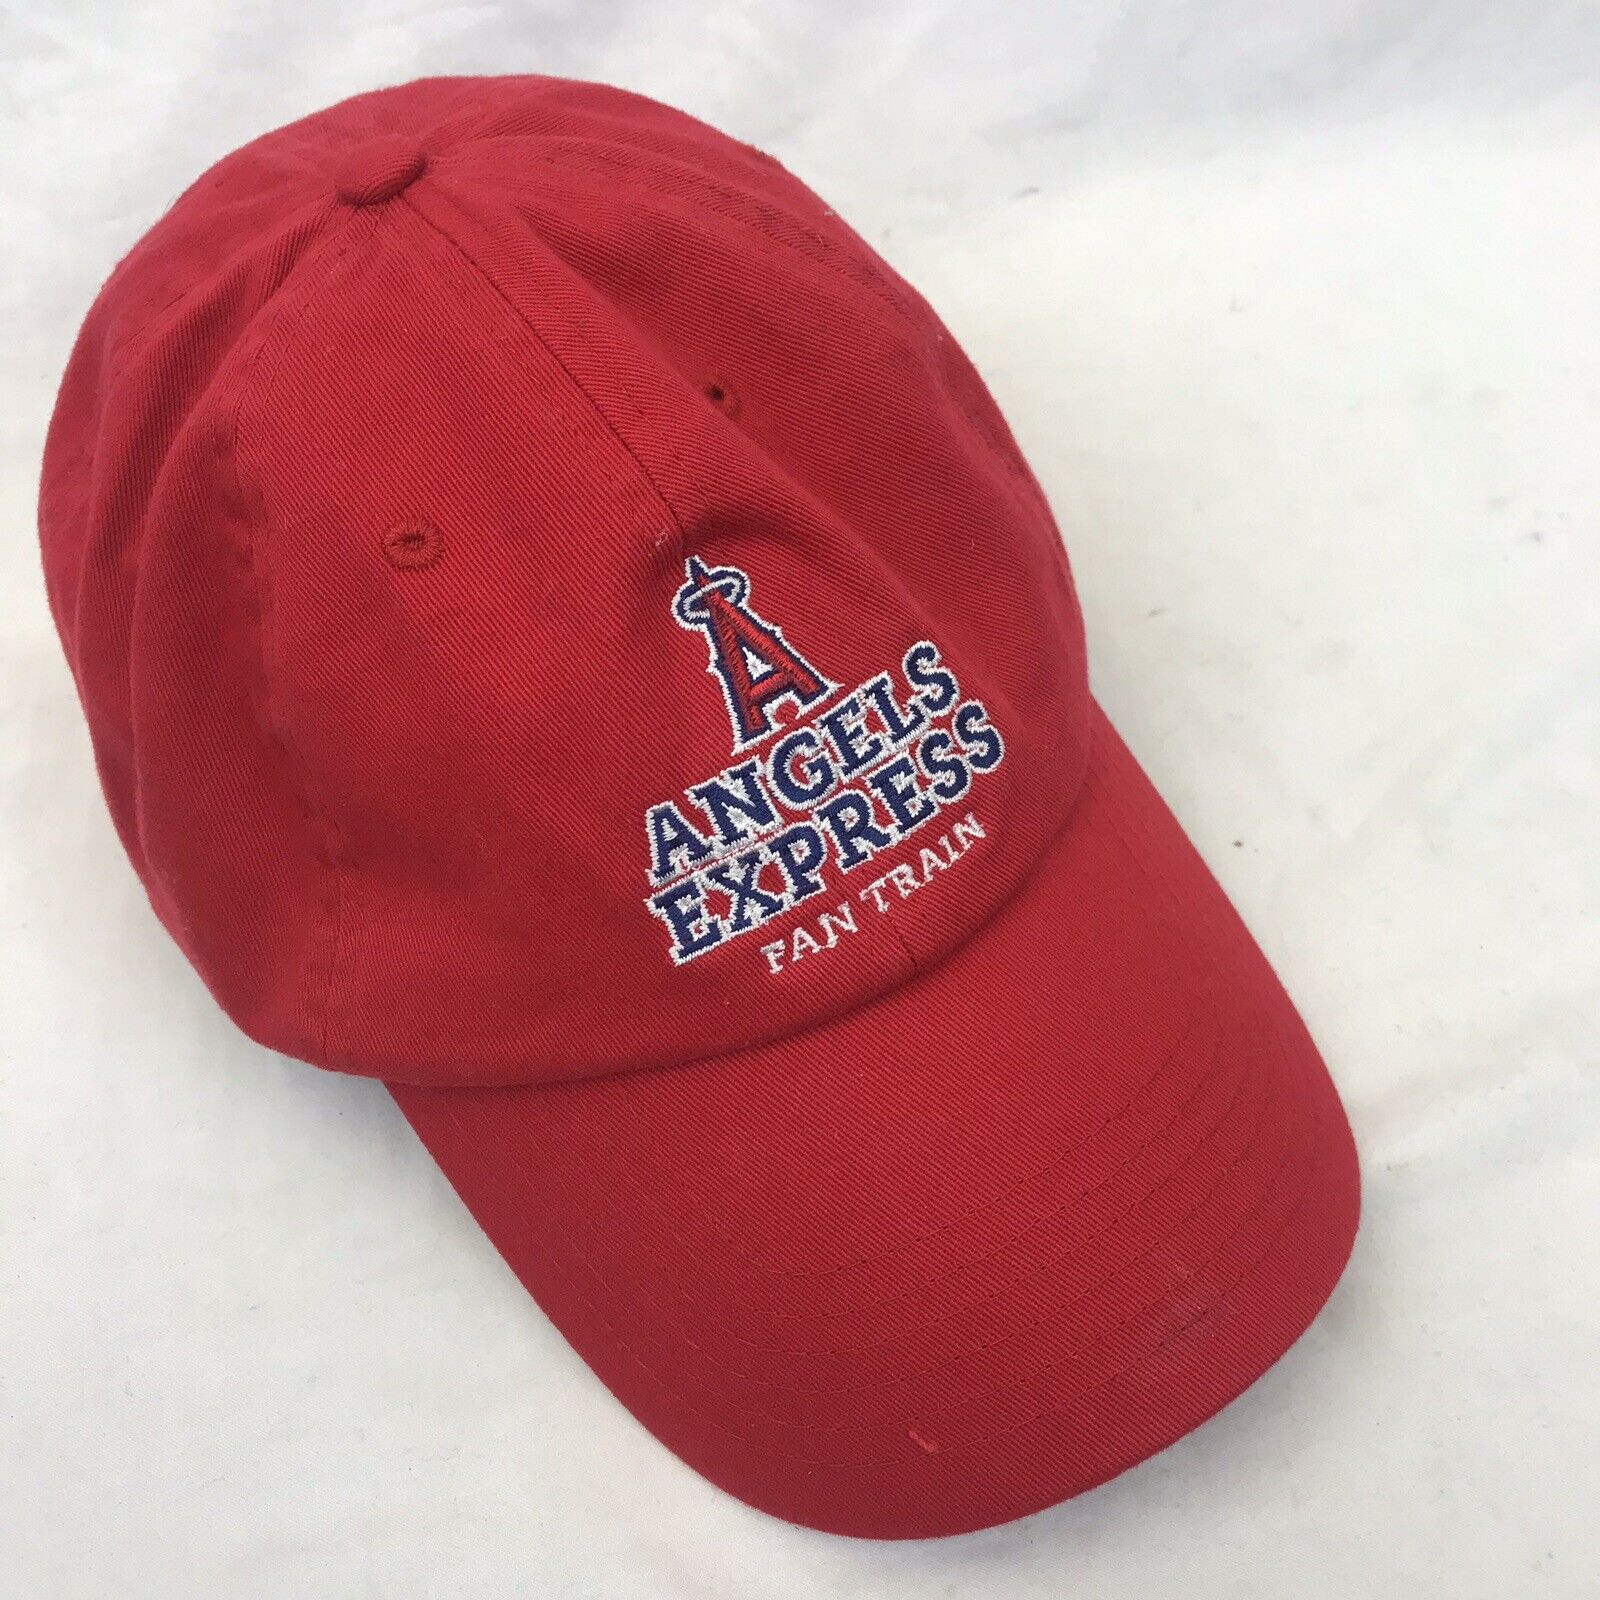 Los Angeles Anaheim Angels Express Fan Train Baseball Cap OCTA